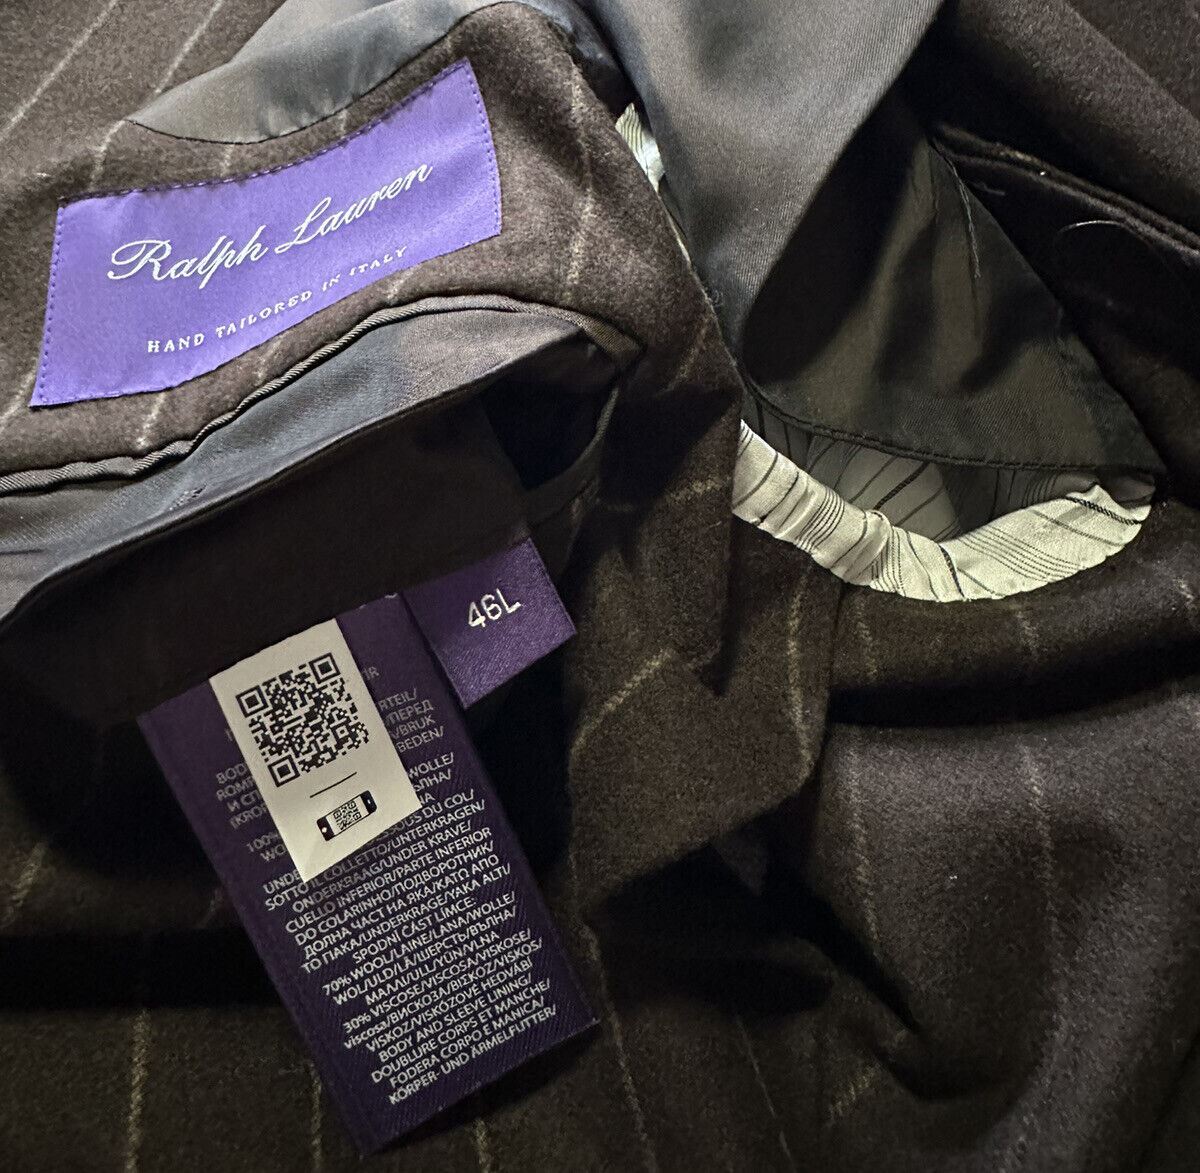 Neu $4995 Ralph Lauren Purple Label Herren-Zweireiheranzug, Braun, 46L US/56L Eu